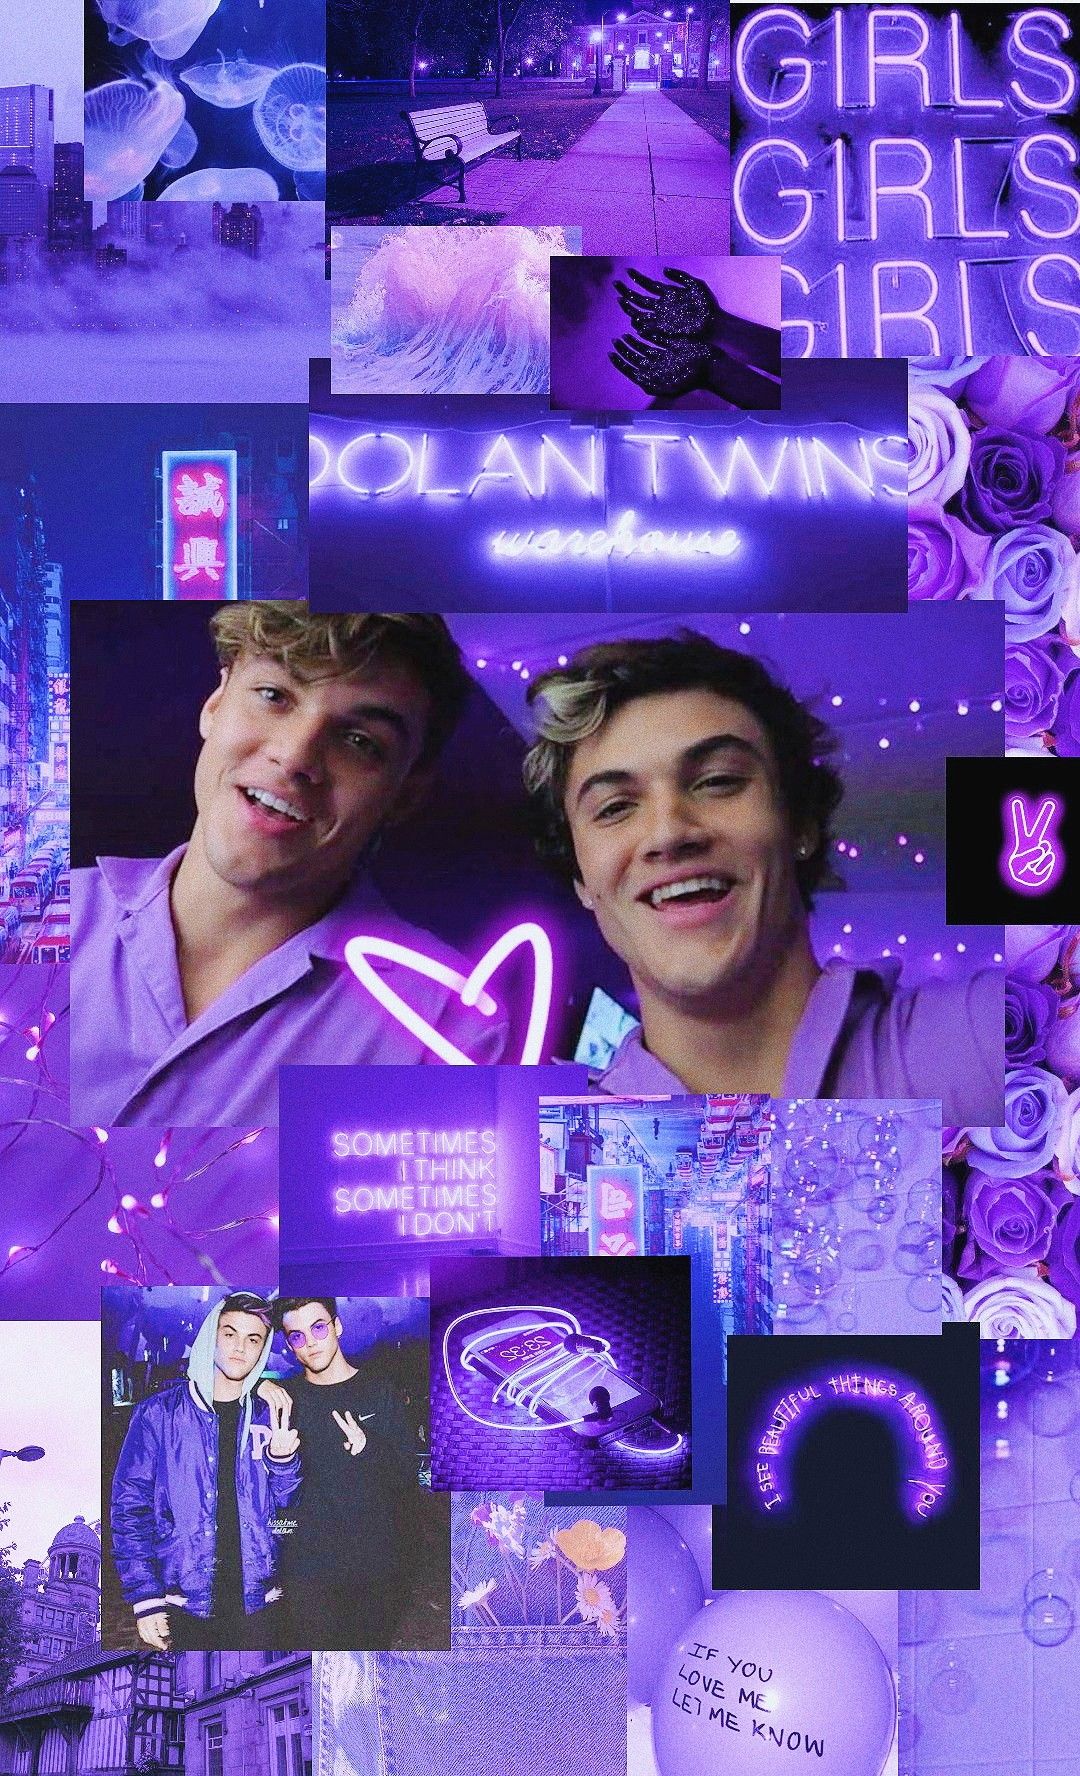 dolan twins wallpaper,violet,purple,electric blue,poster,graphic design